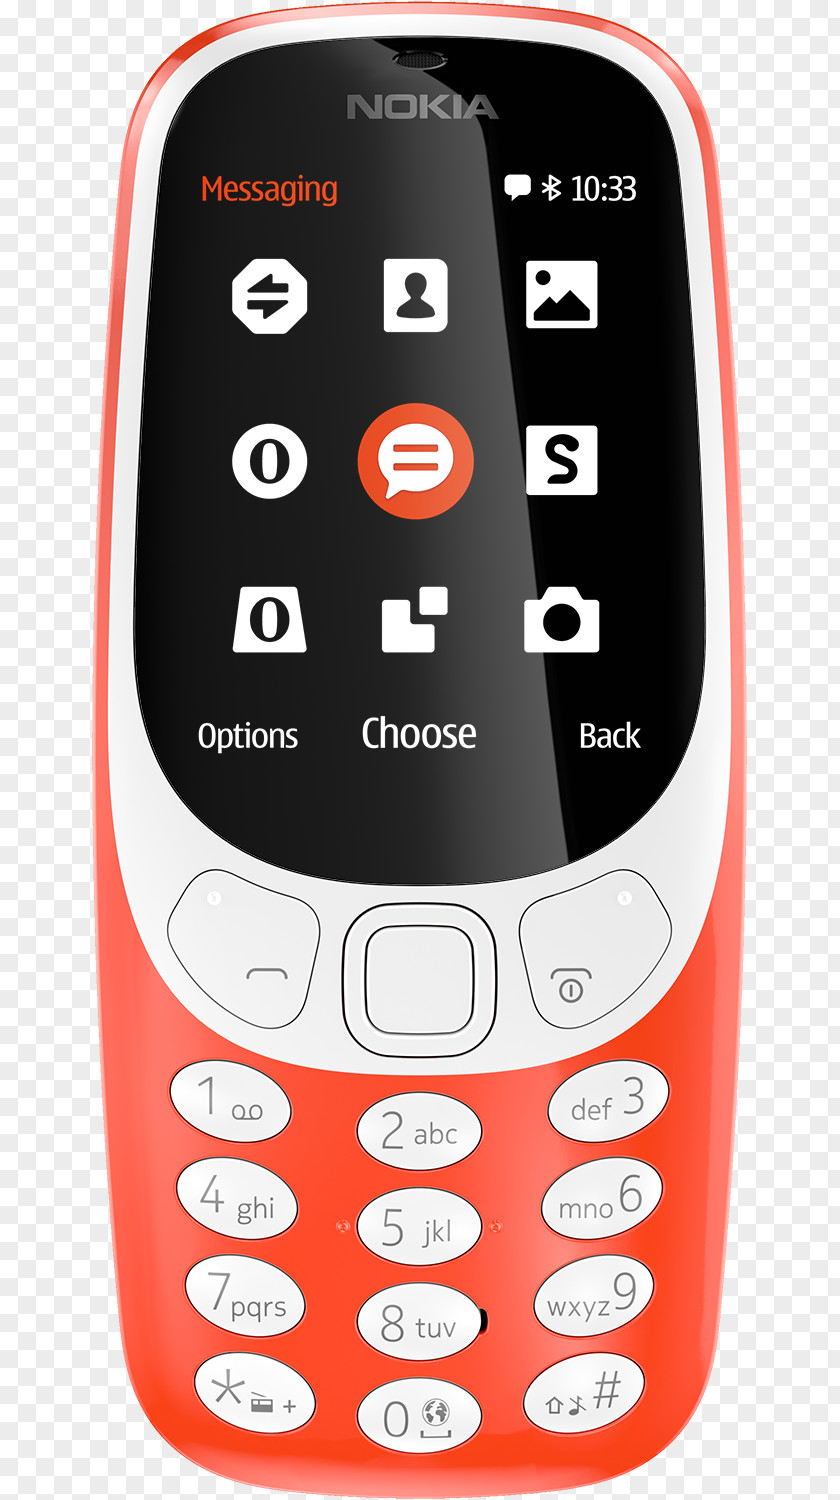 Nokia 3310 (2017) HMD Global Dual SIM Telephone PNG